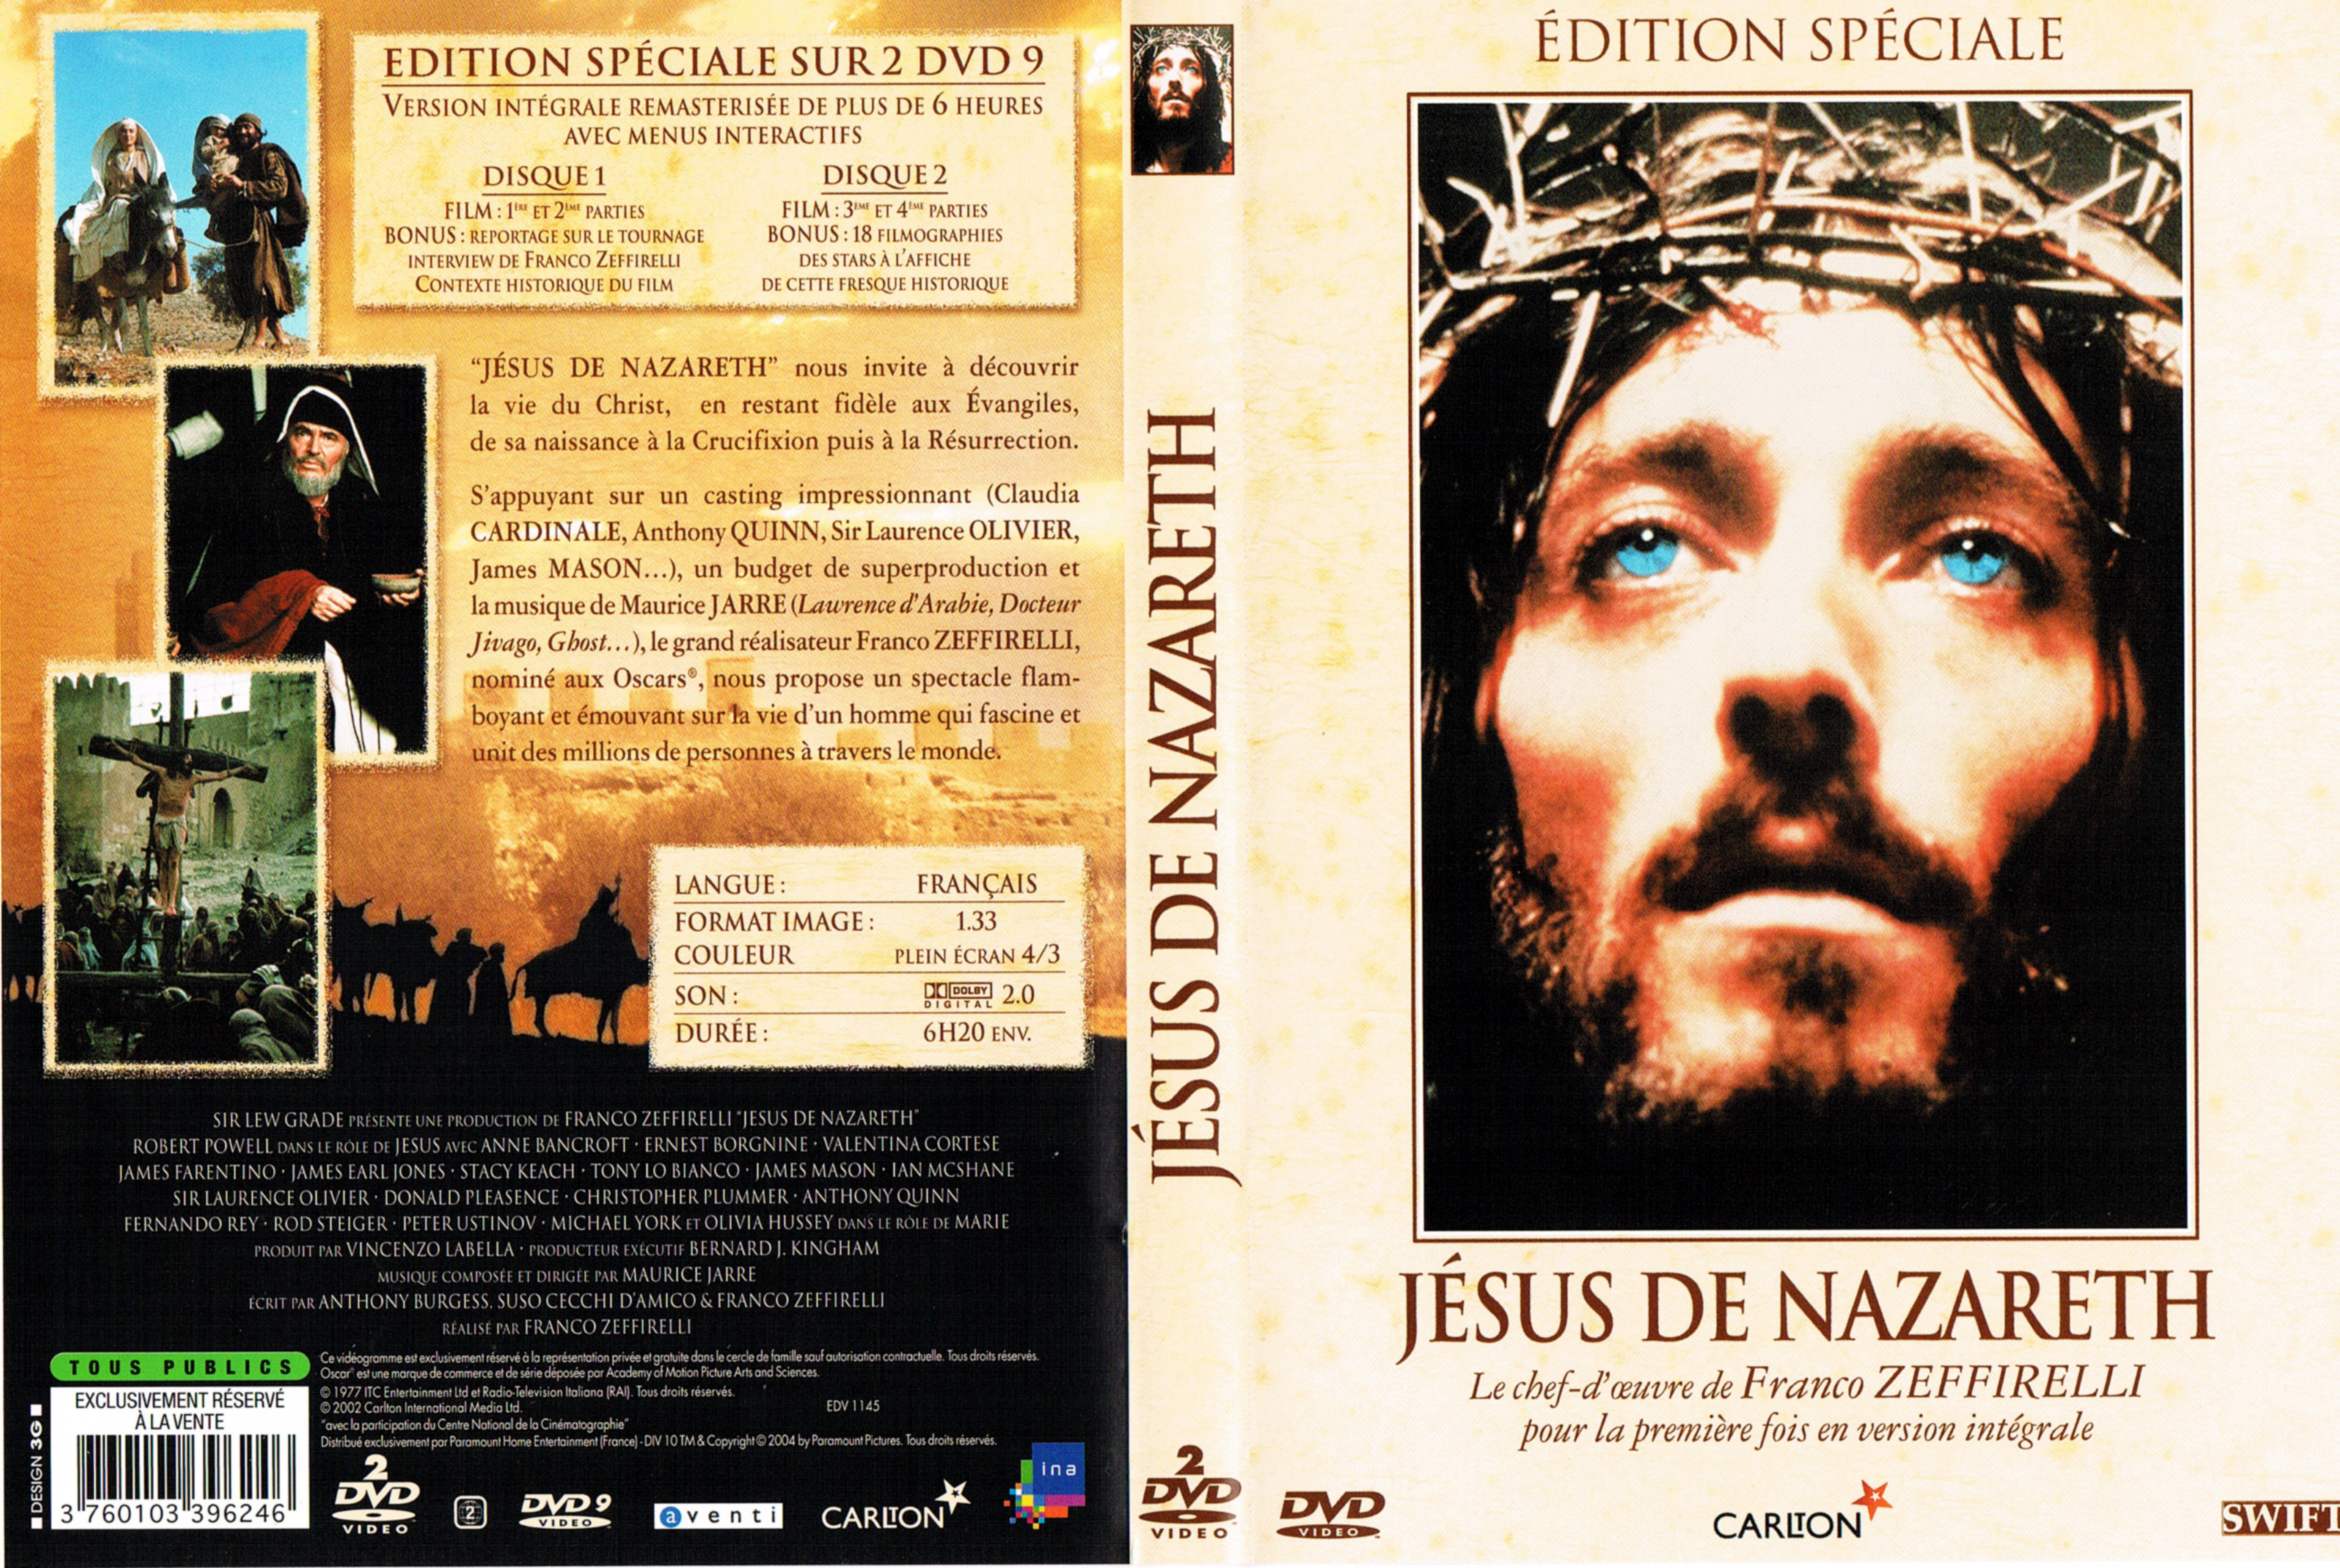 Jaquette DVD Jsus de Nazareth v2